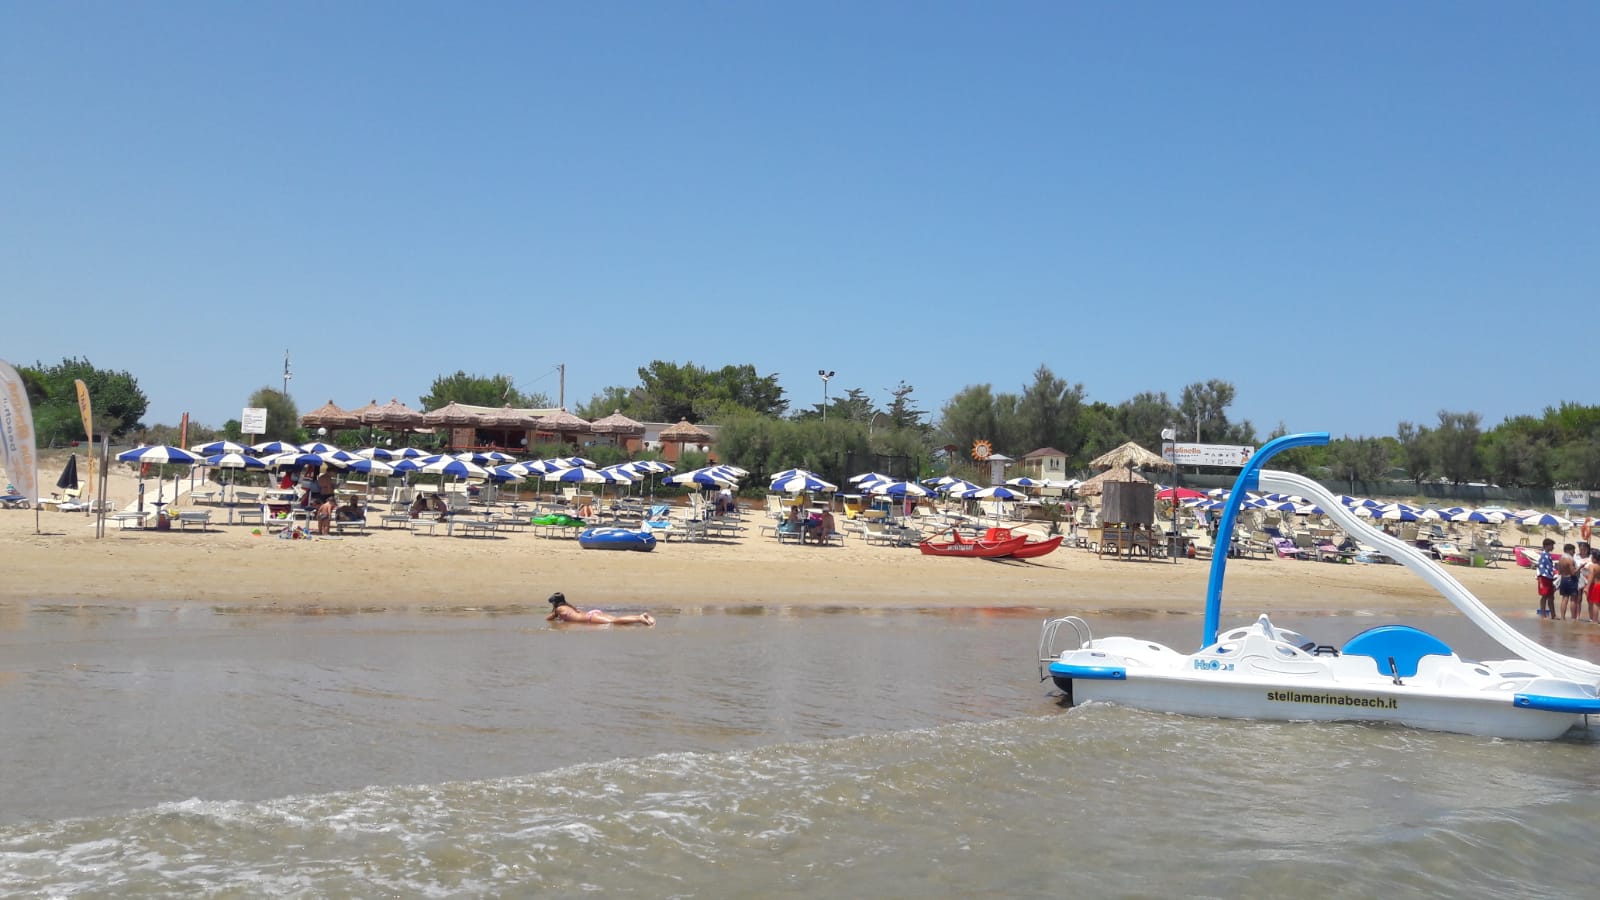 Foto de Spiaggia di Molinella con muy limpio nivel de limpieza